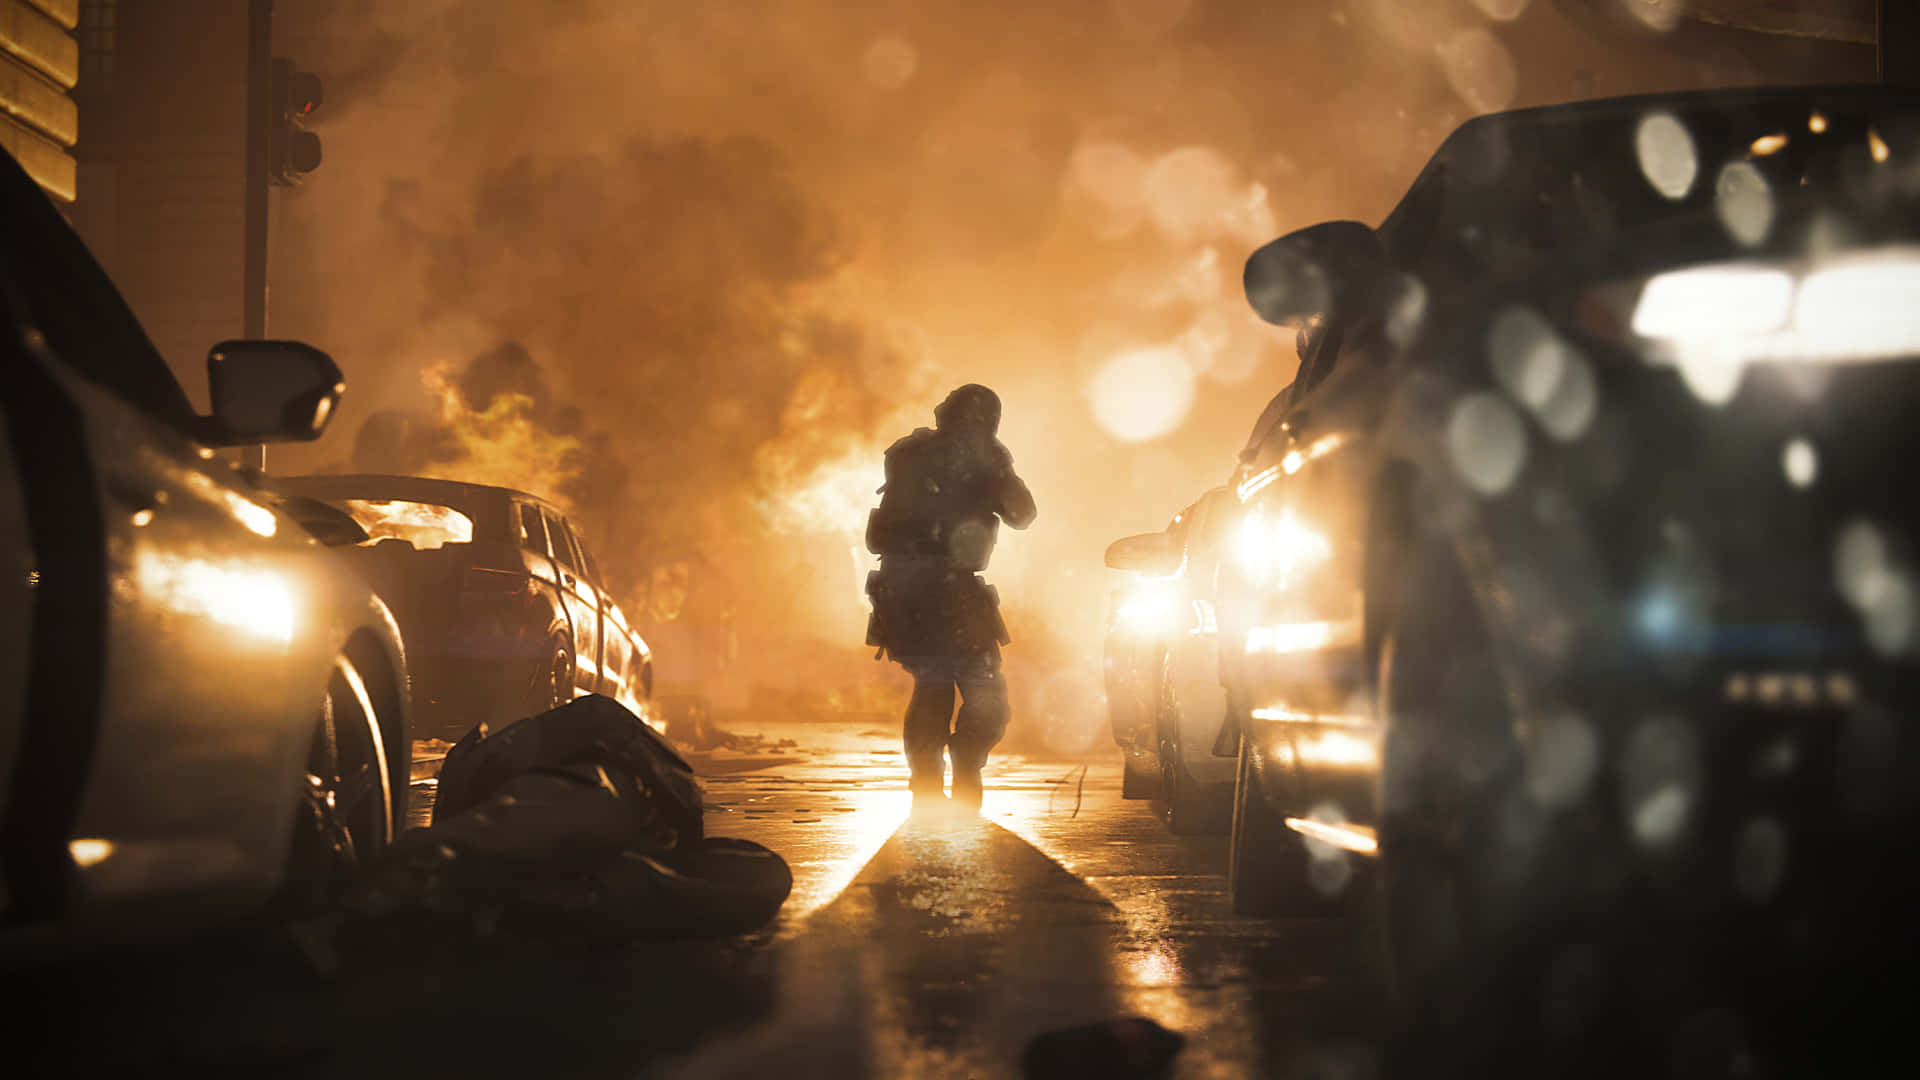 Intense Call of Duty PS4 action on a widescreen wallpaper Wallpaper